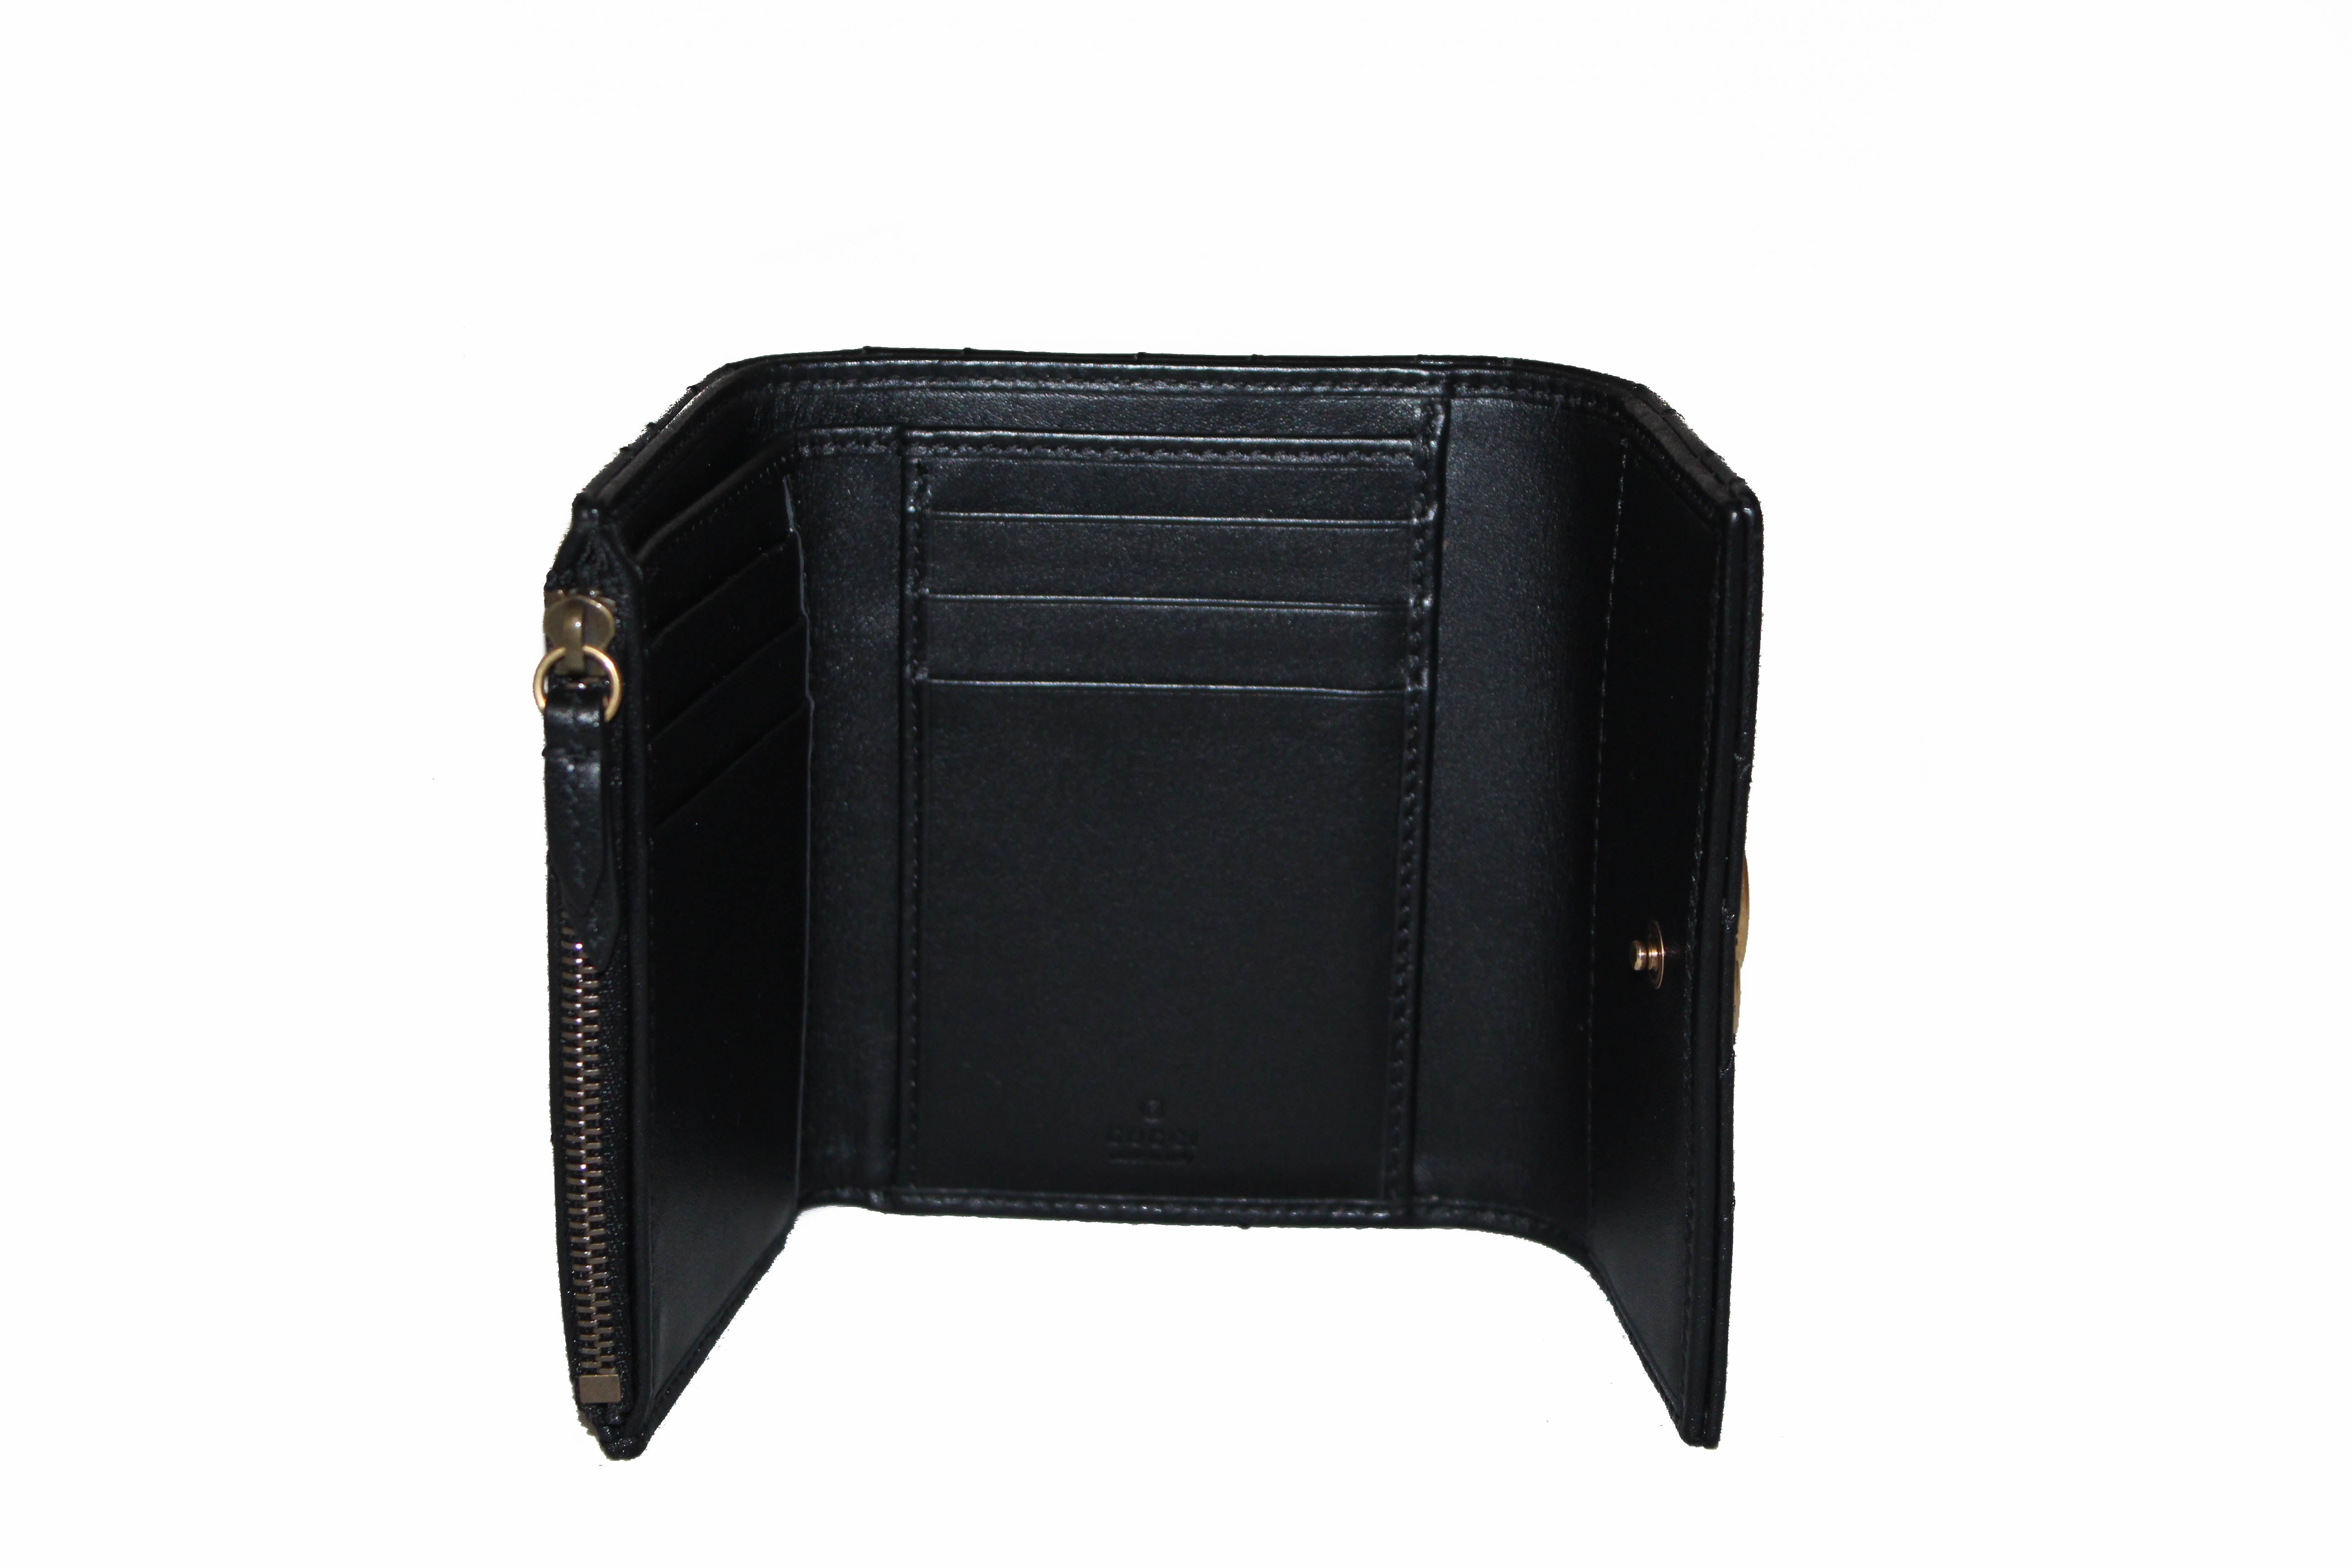 Authentic Gucci Black Marmont Chevron Leather Wallet